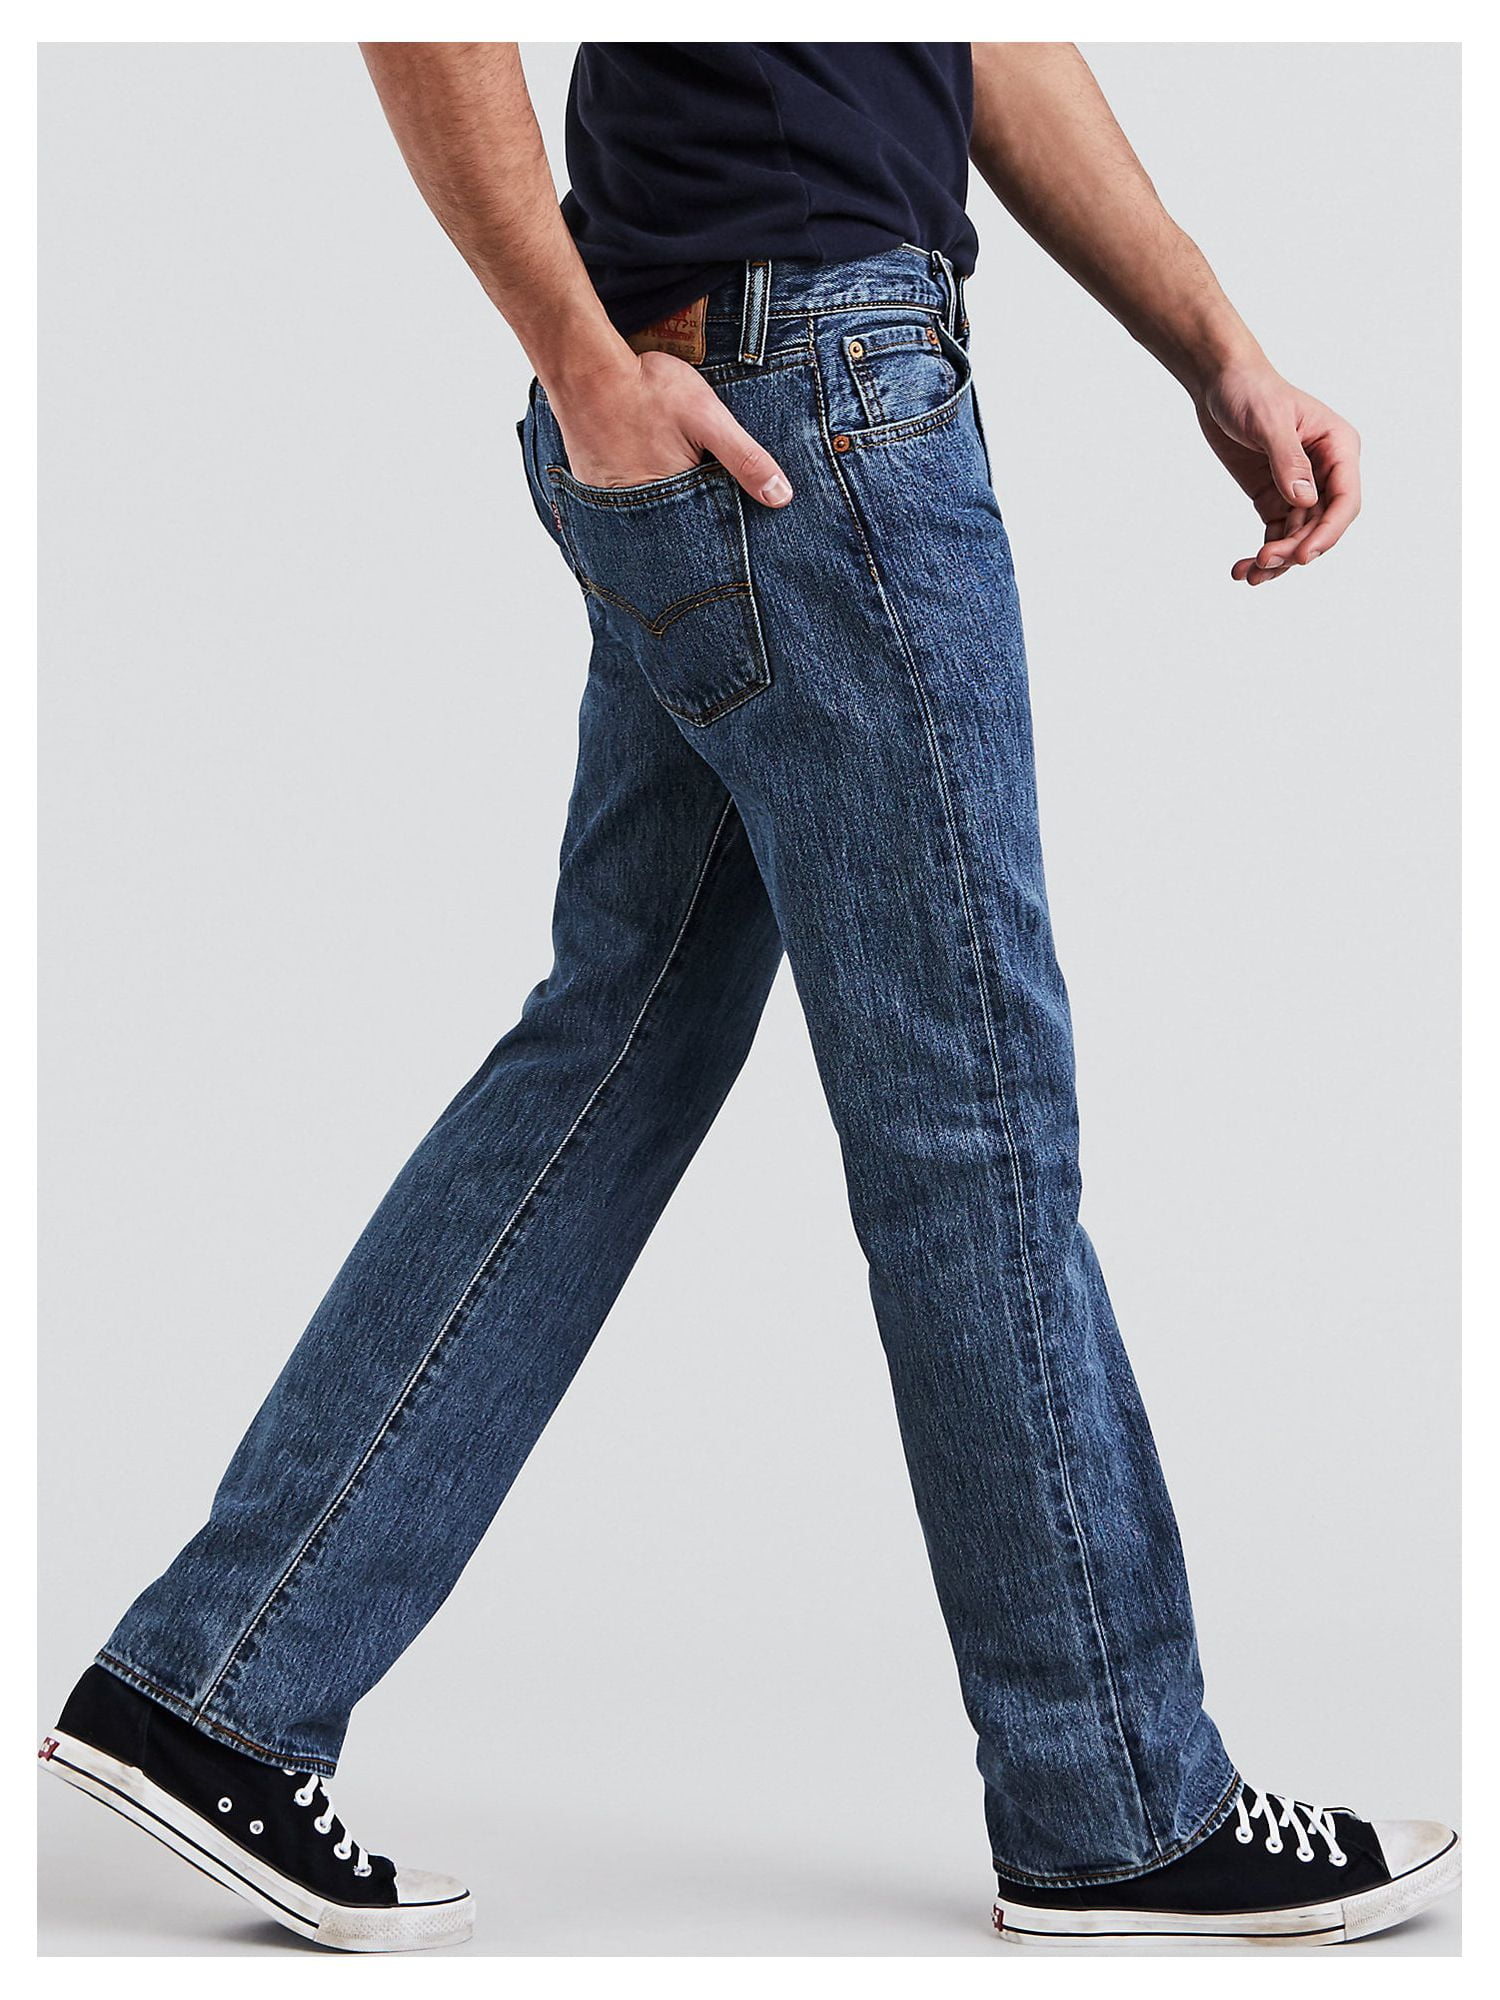 Shop Vintage 90's Levis Jeans | NORTHERN GRIP – NorthernGrip